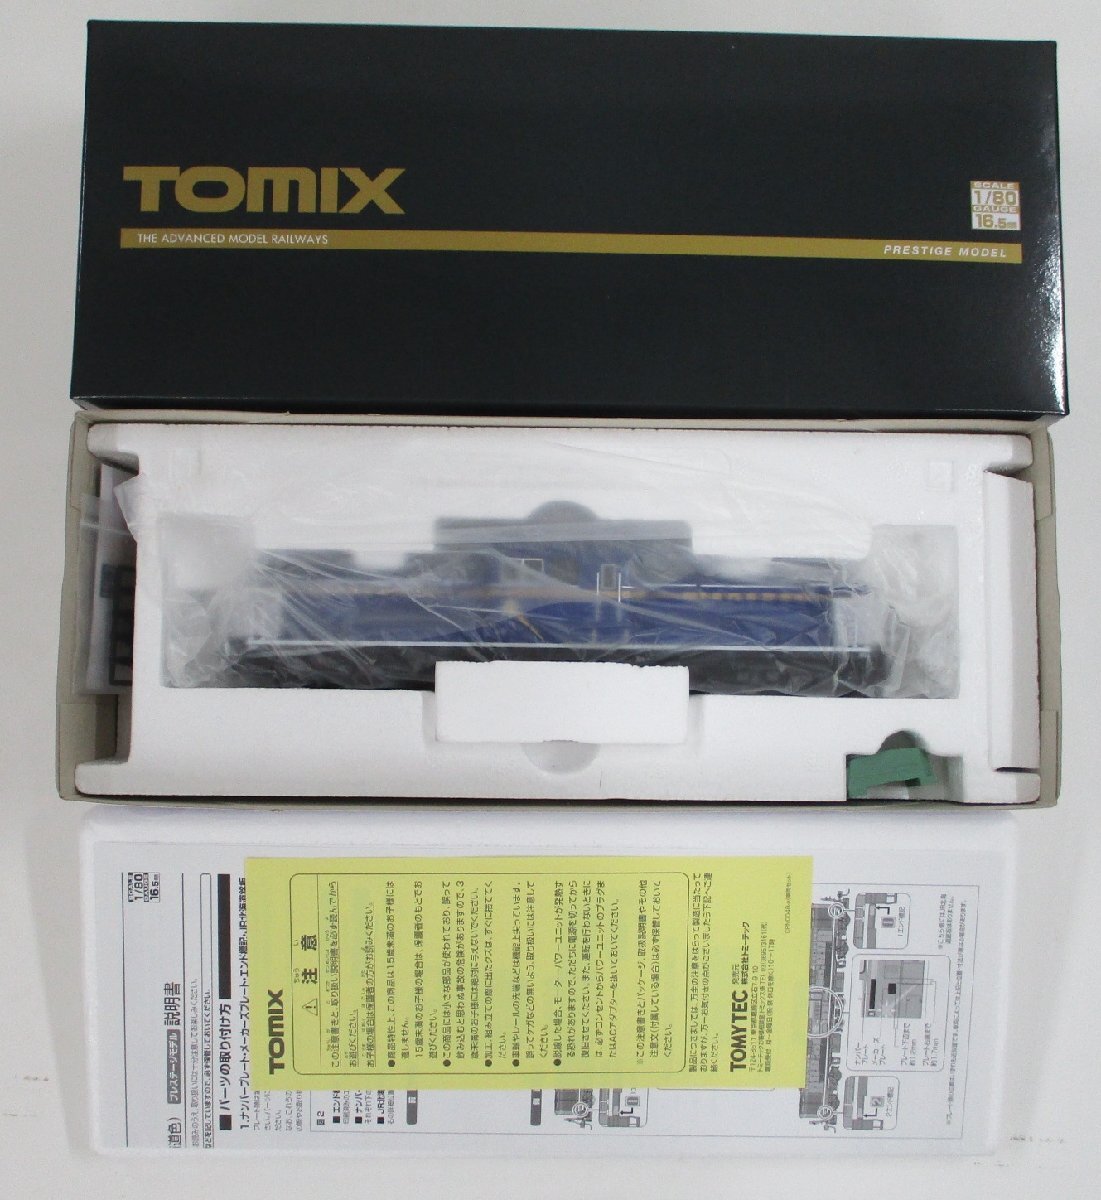 TOMIX HO-243 JR DD51-1000形ディーゼル機関車(JR北海道色・プレステージモデル)【A】mth042316の画像4